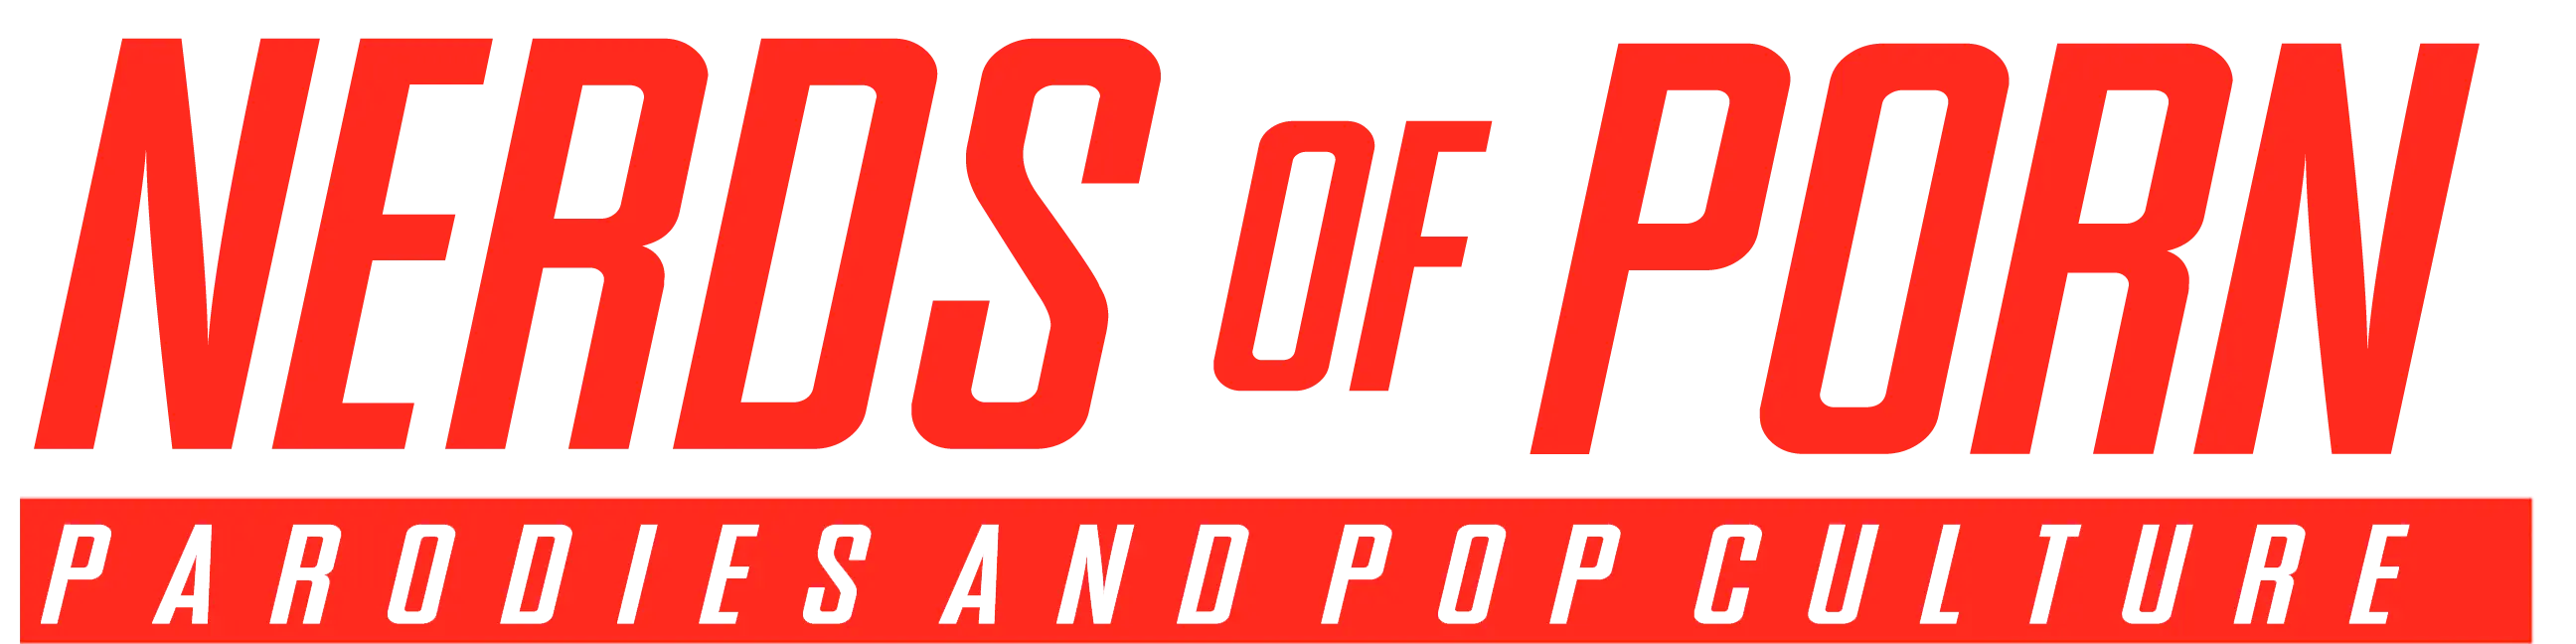 store logo